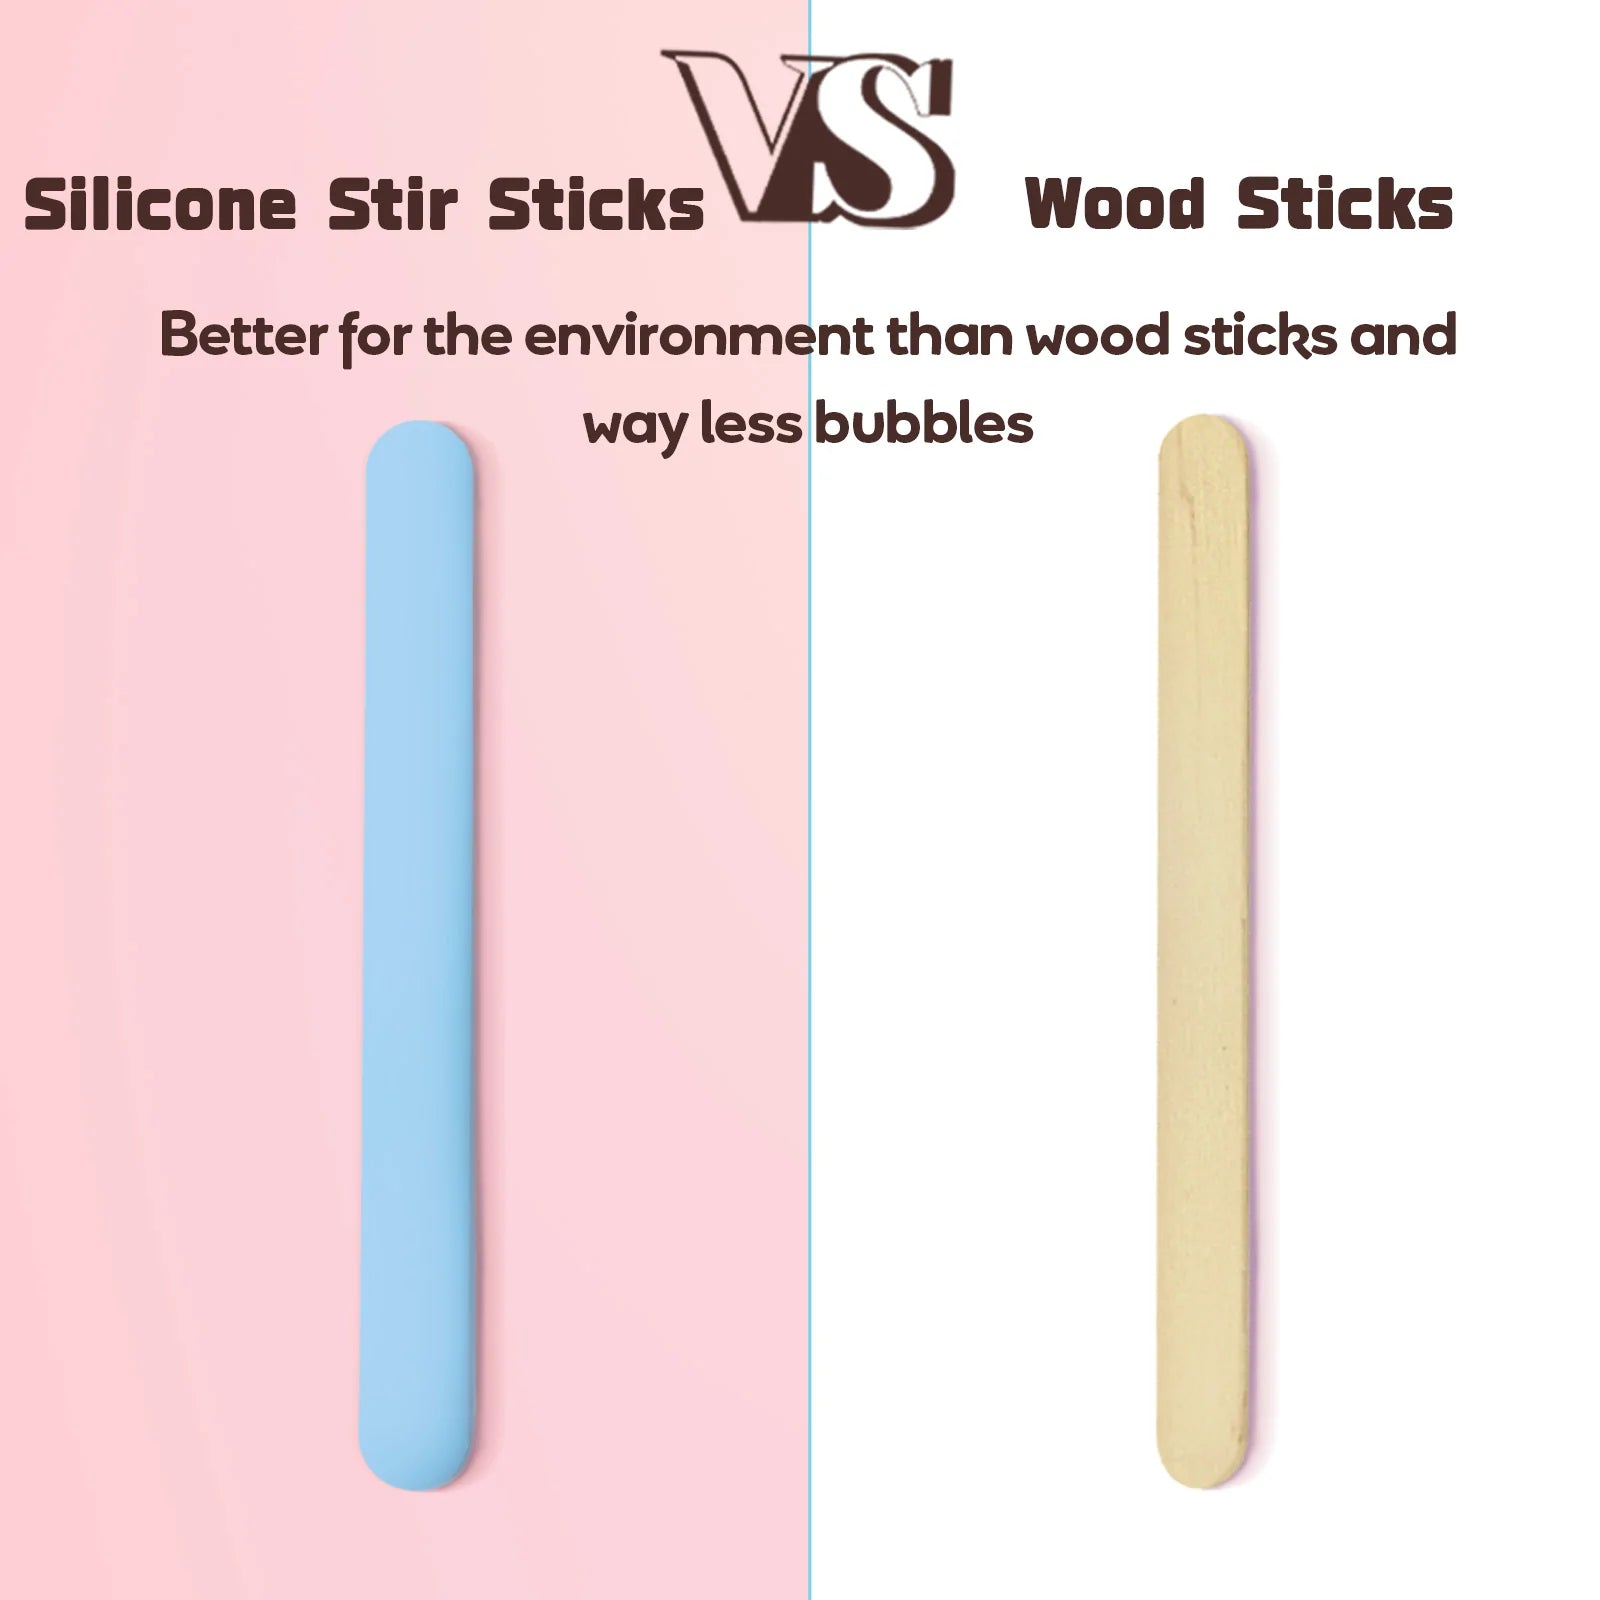 Silicone Stir Sticks